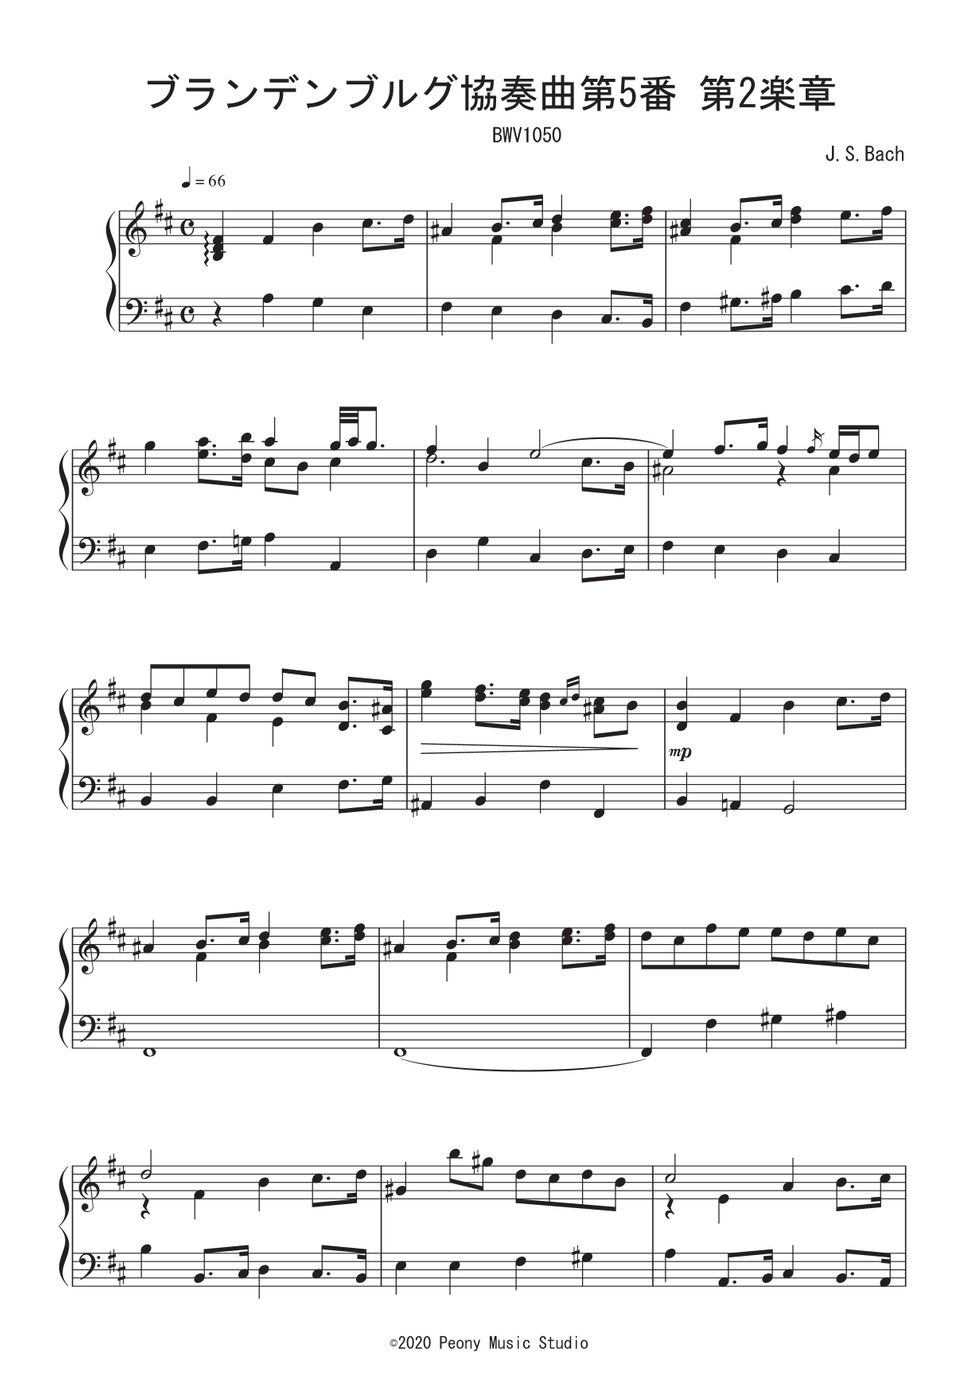 J.S.バッハ - 「ブランデンブルク協奏曲」第5番より 第2楽章 by Peony